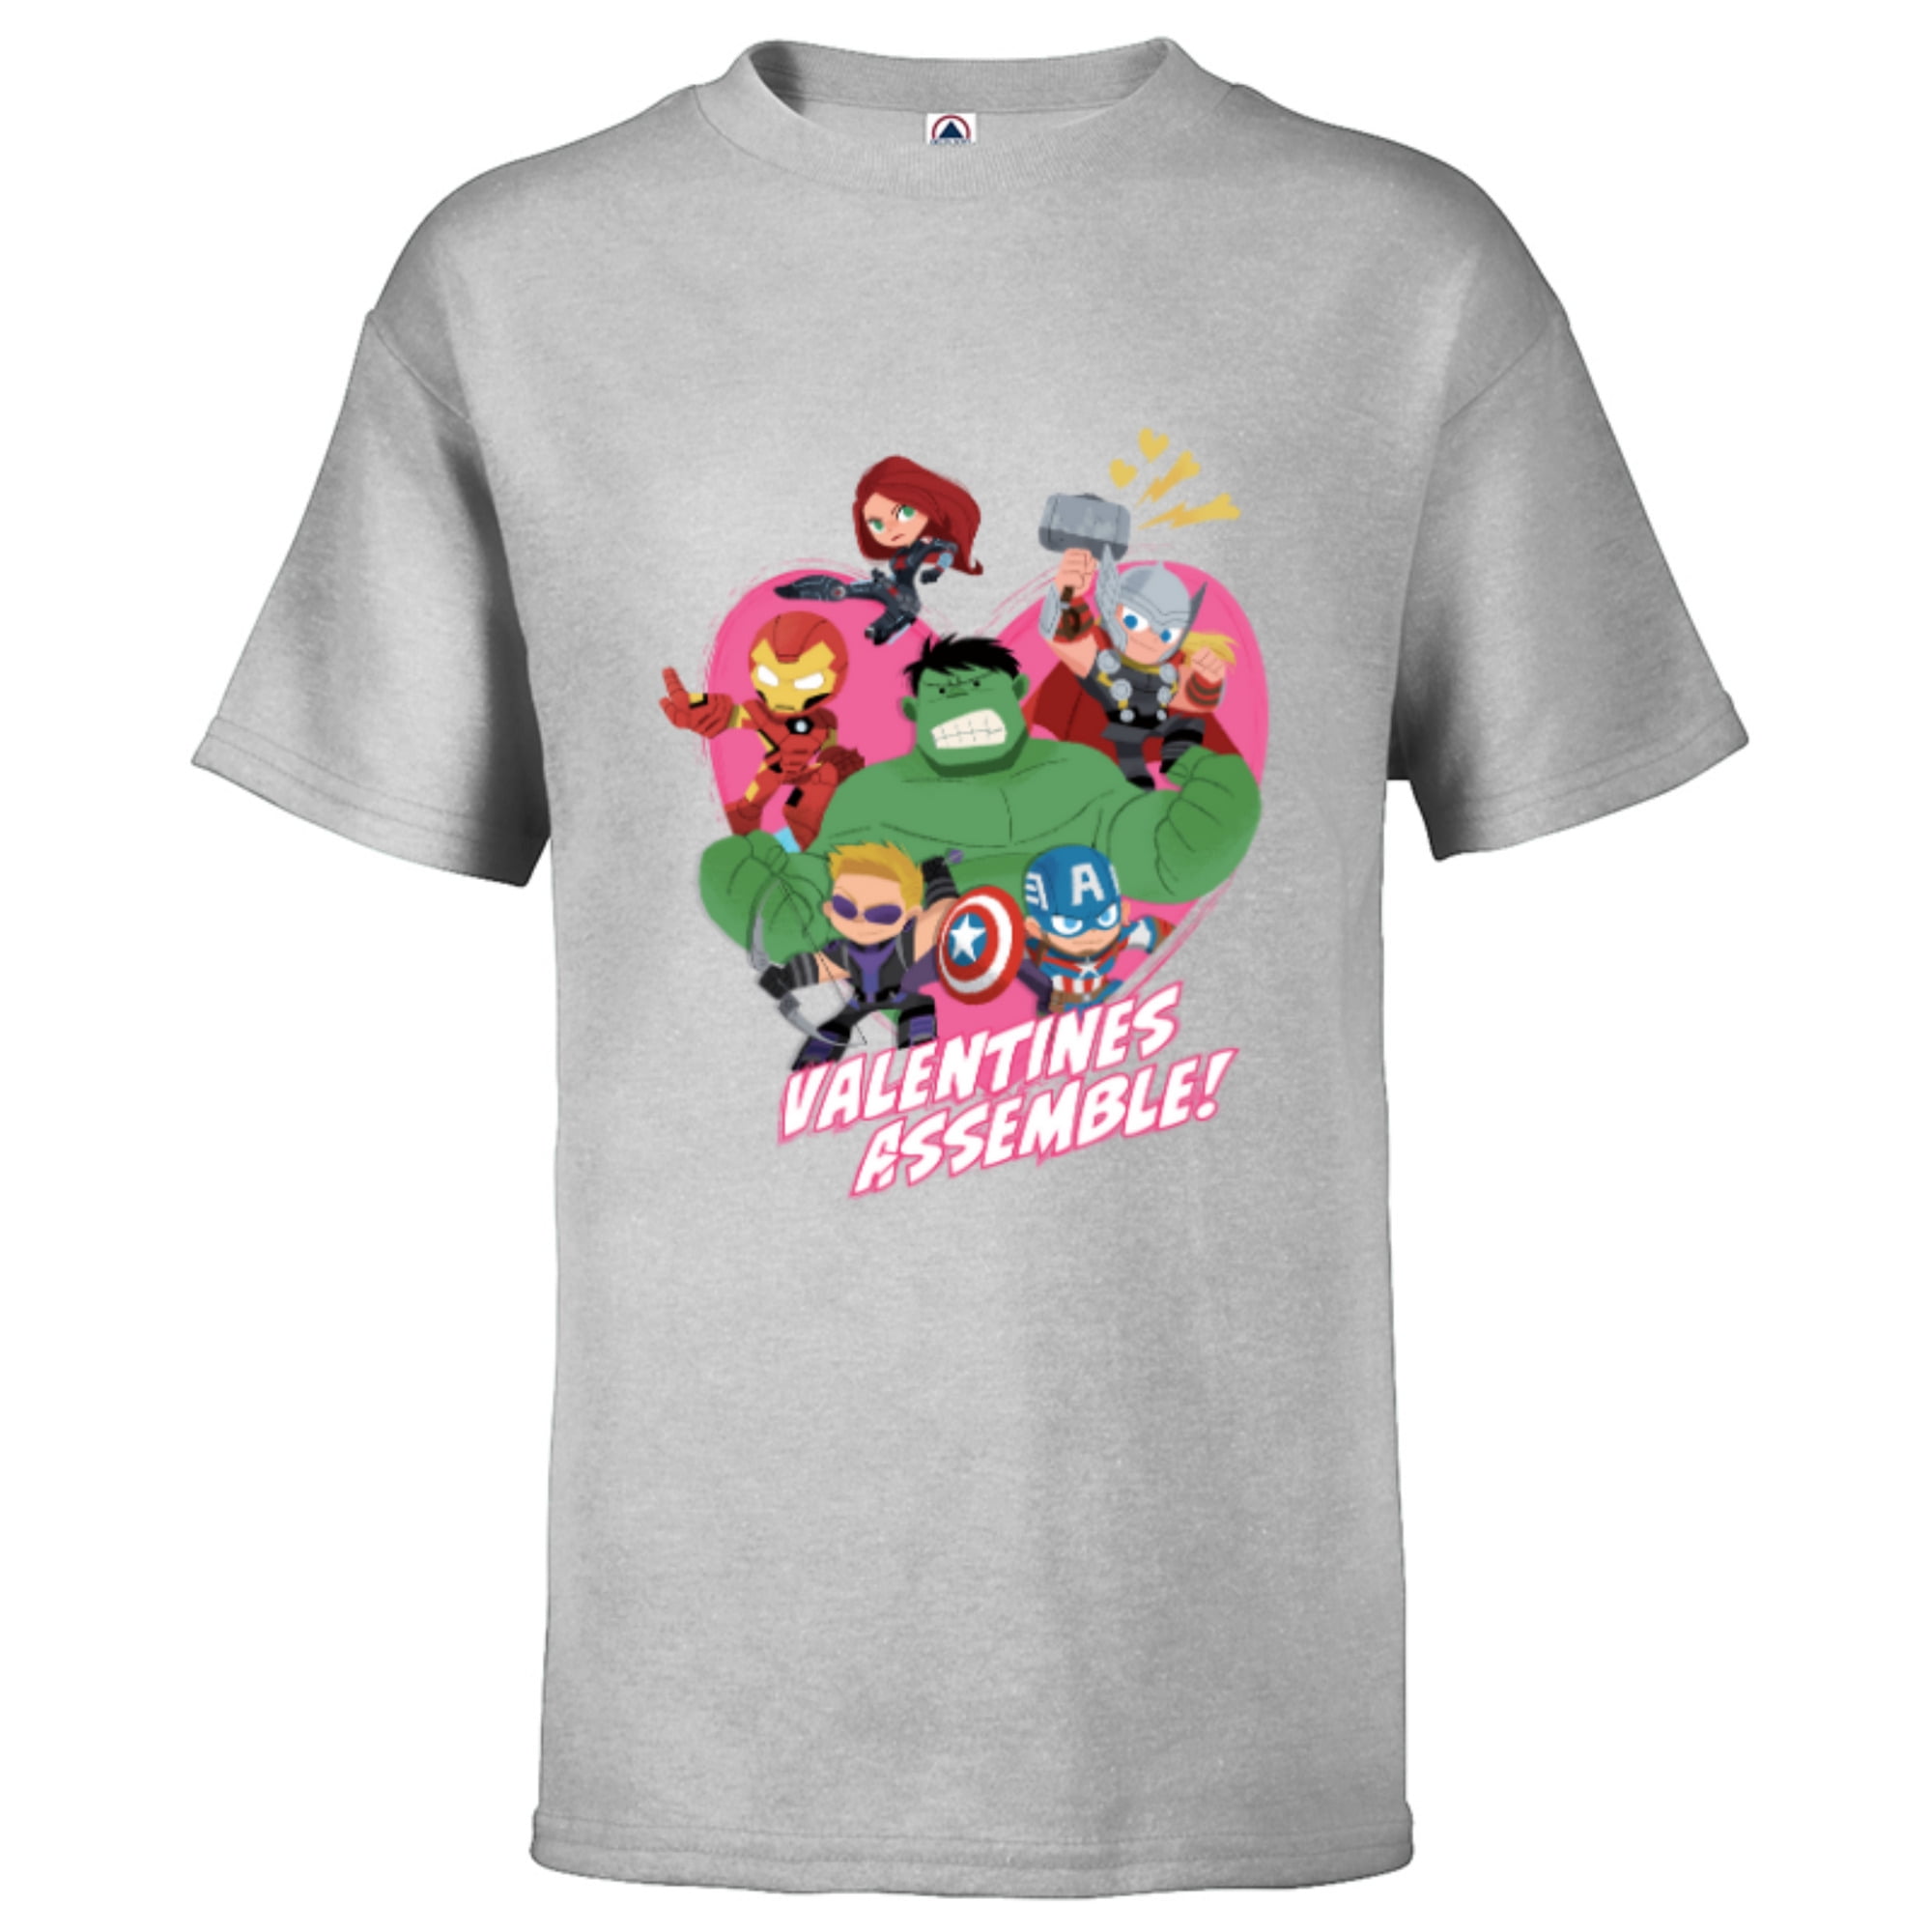 Marvel Avengers Valentine's Assemble - Short Sleeve T-Shirt for Kids -  Customized-Soft Pink